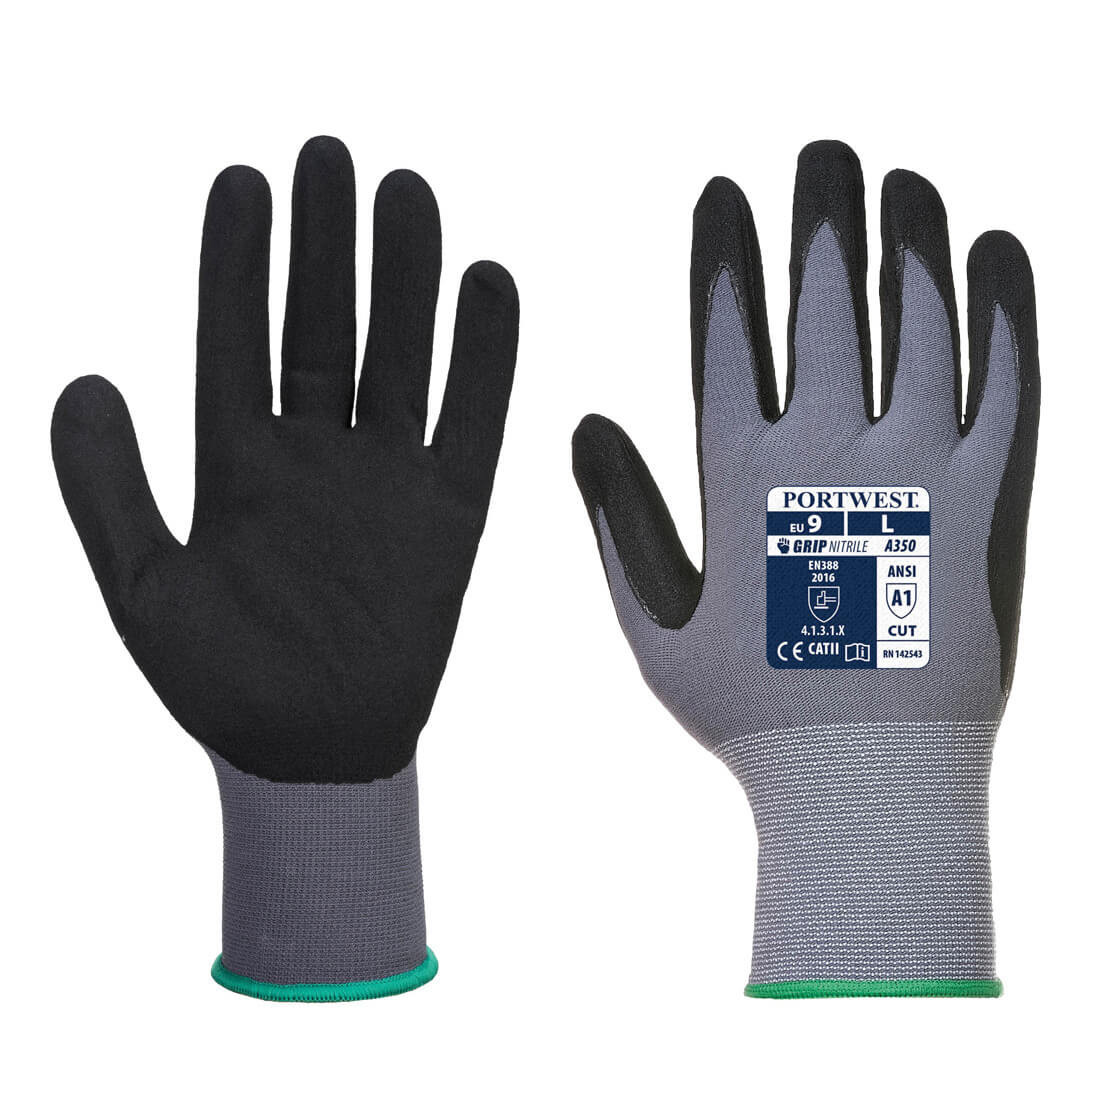 DermiFlex Glove - Personal protection